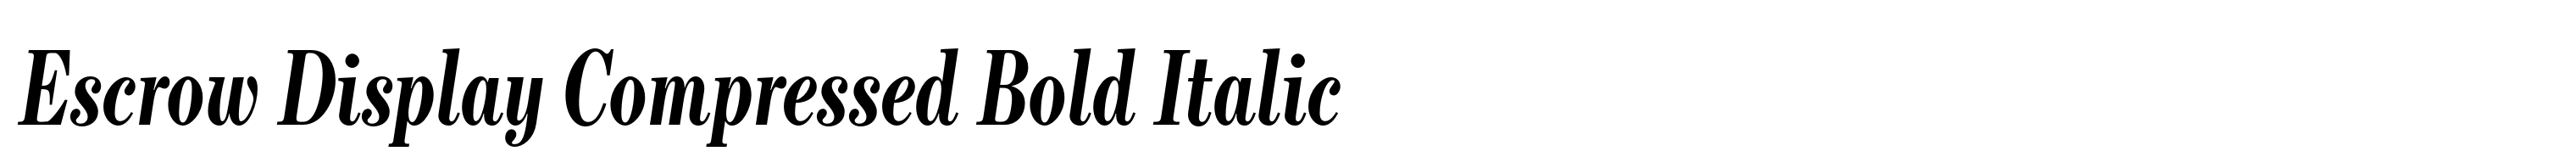 Escrow Display Komprimiert Bold Italic